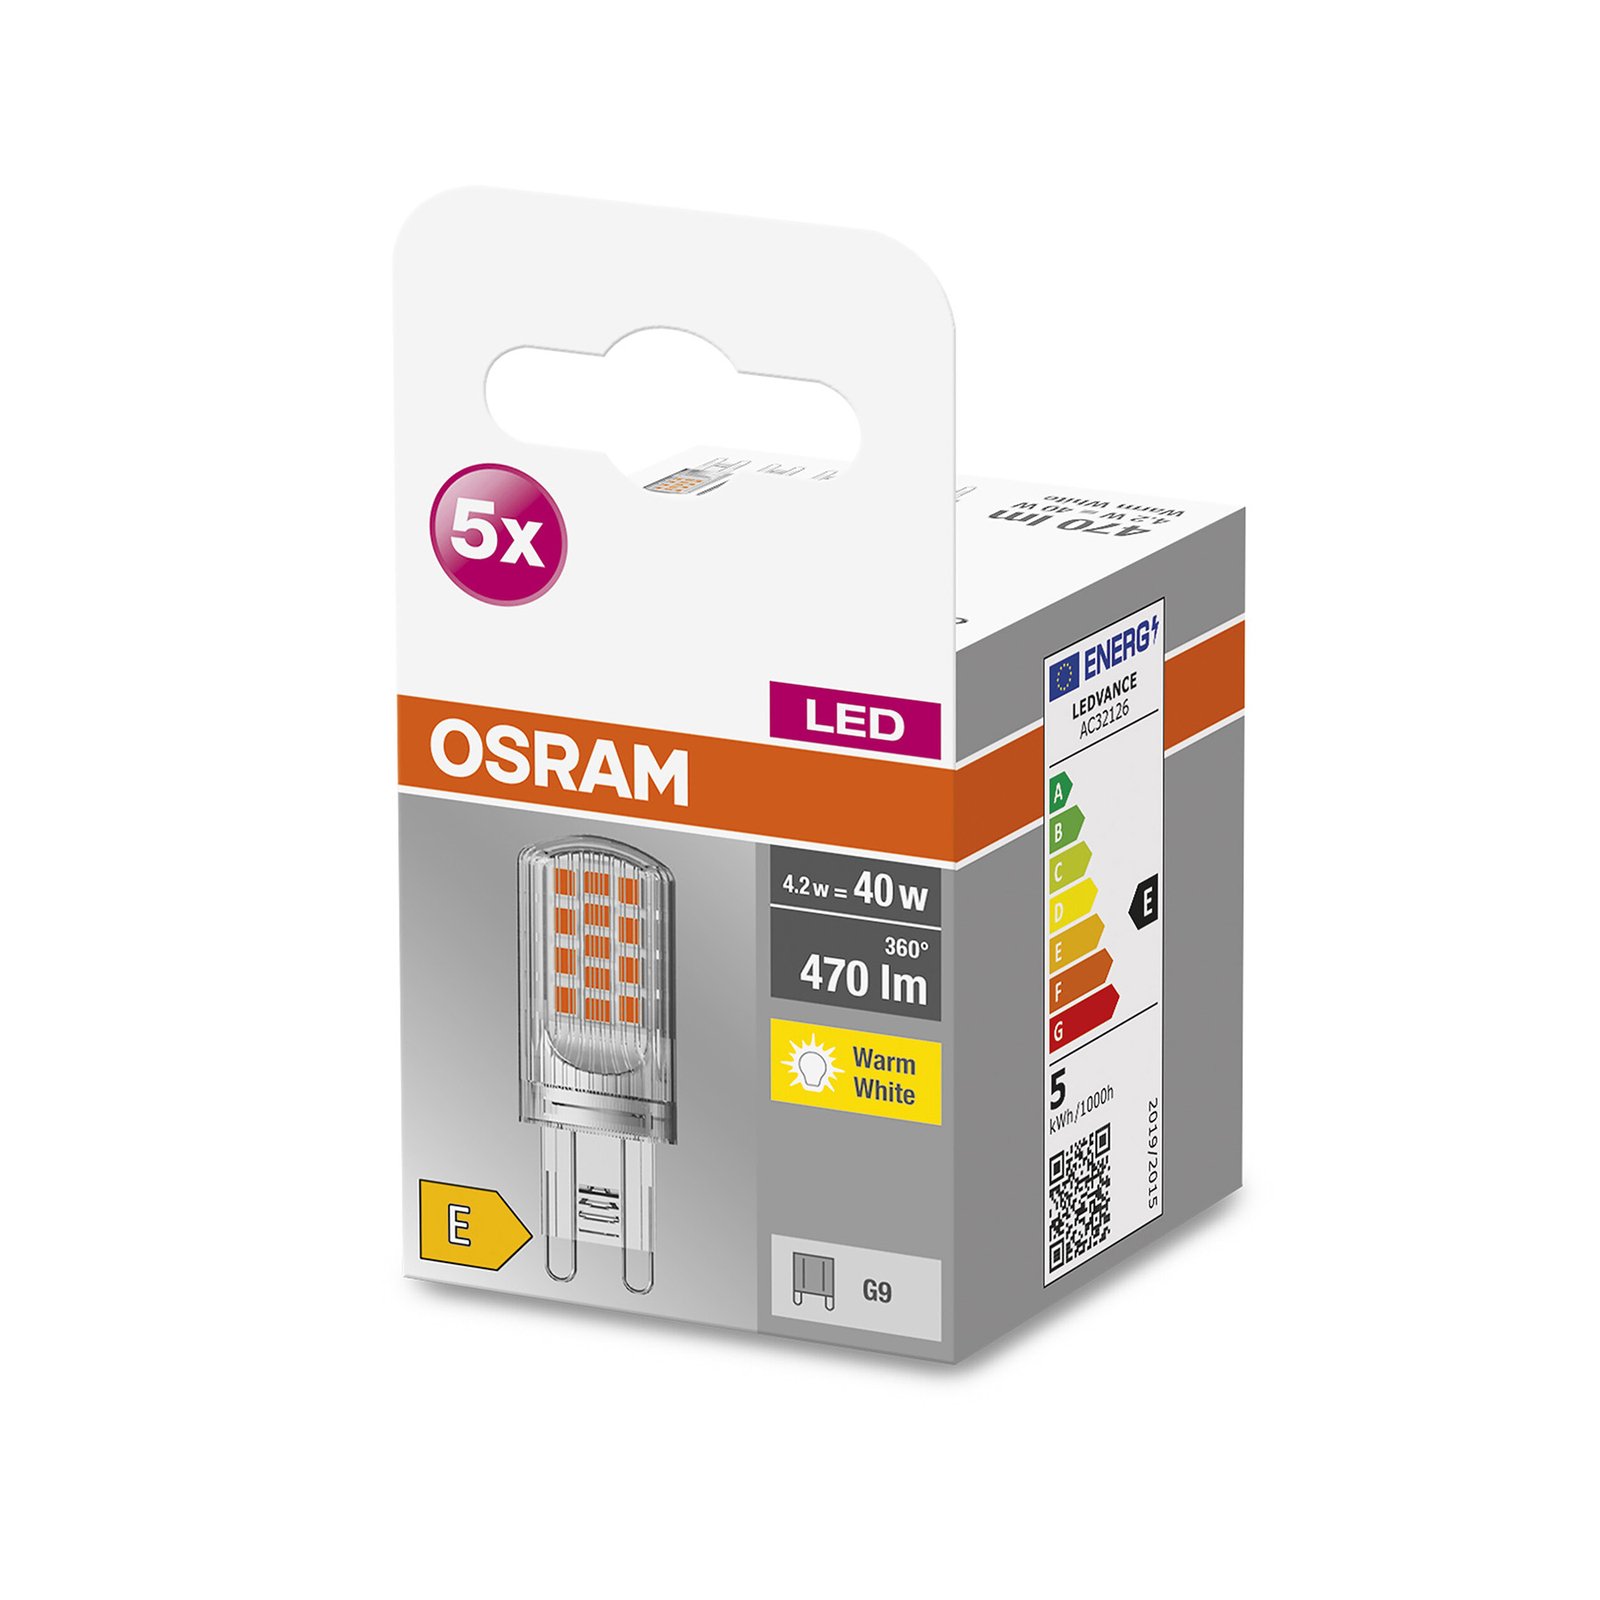 OSRAM Base PIN LED pin base G9 4,2W 470lm 5s